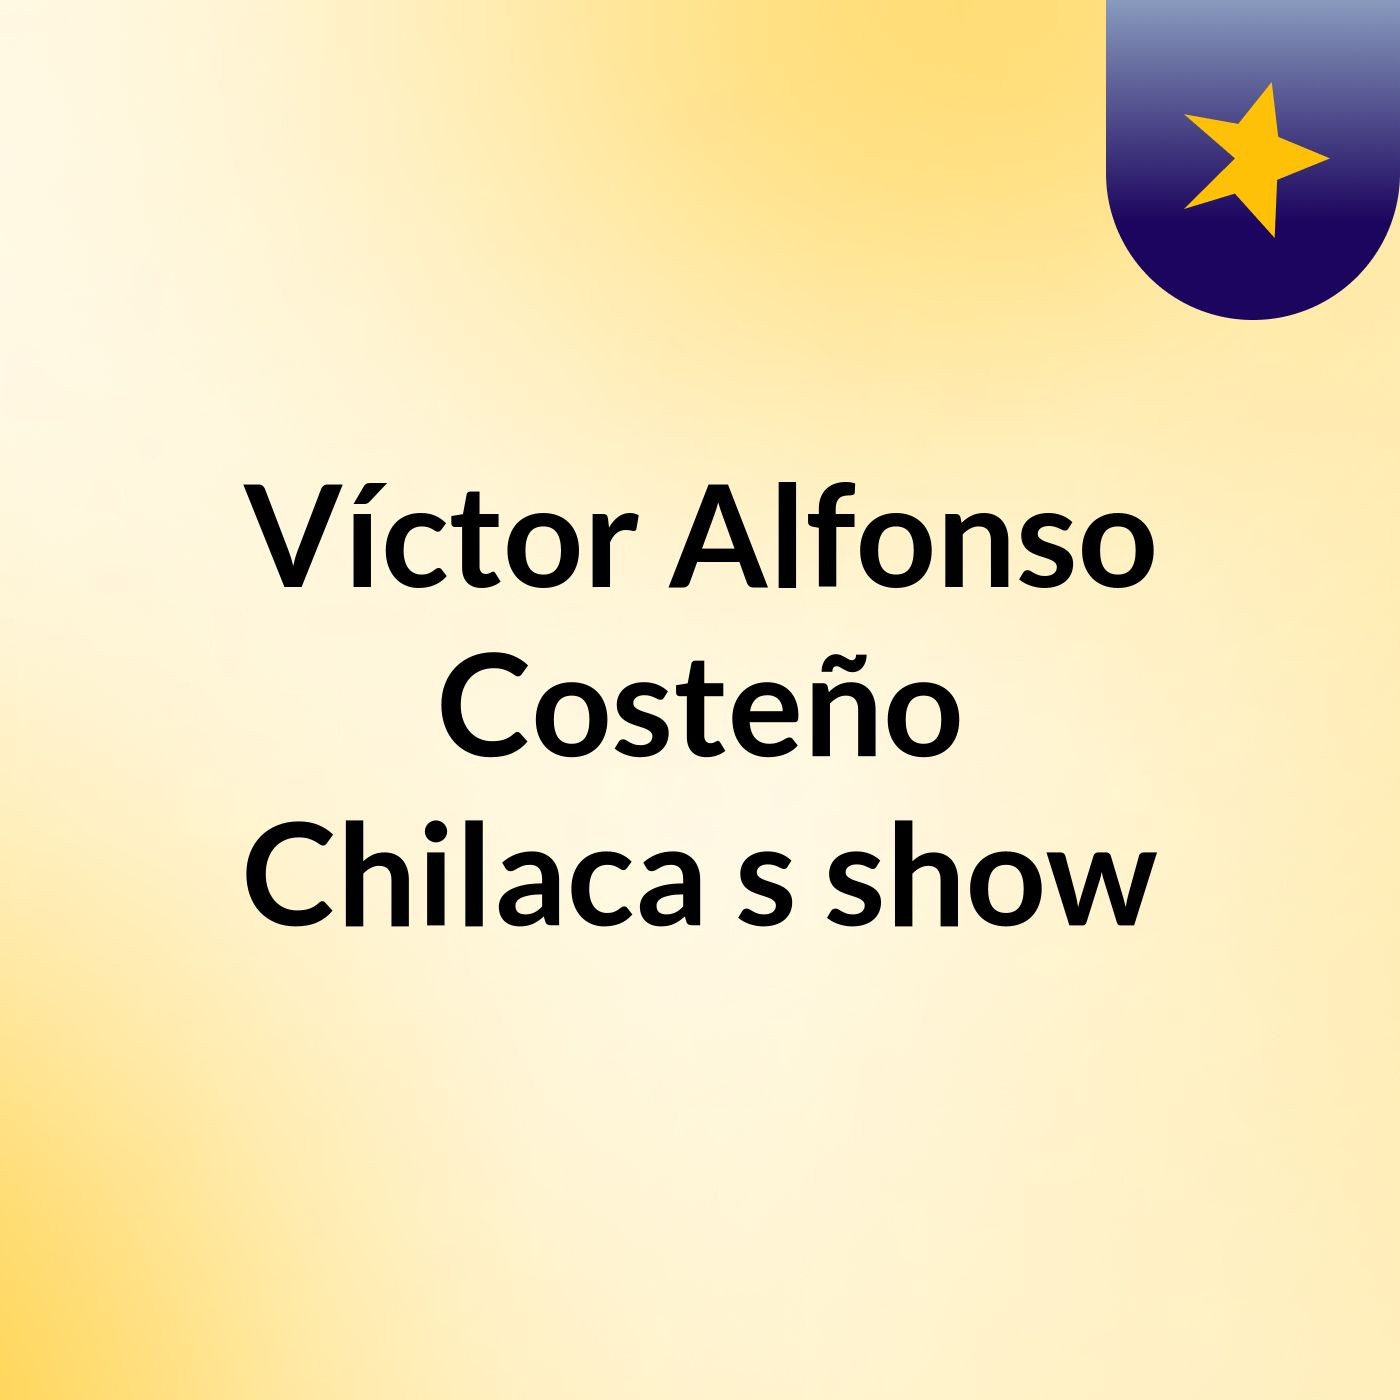 Víctor Alfonso Costeño Chilaca's show